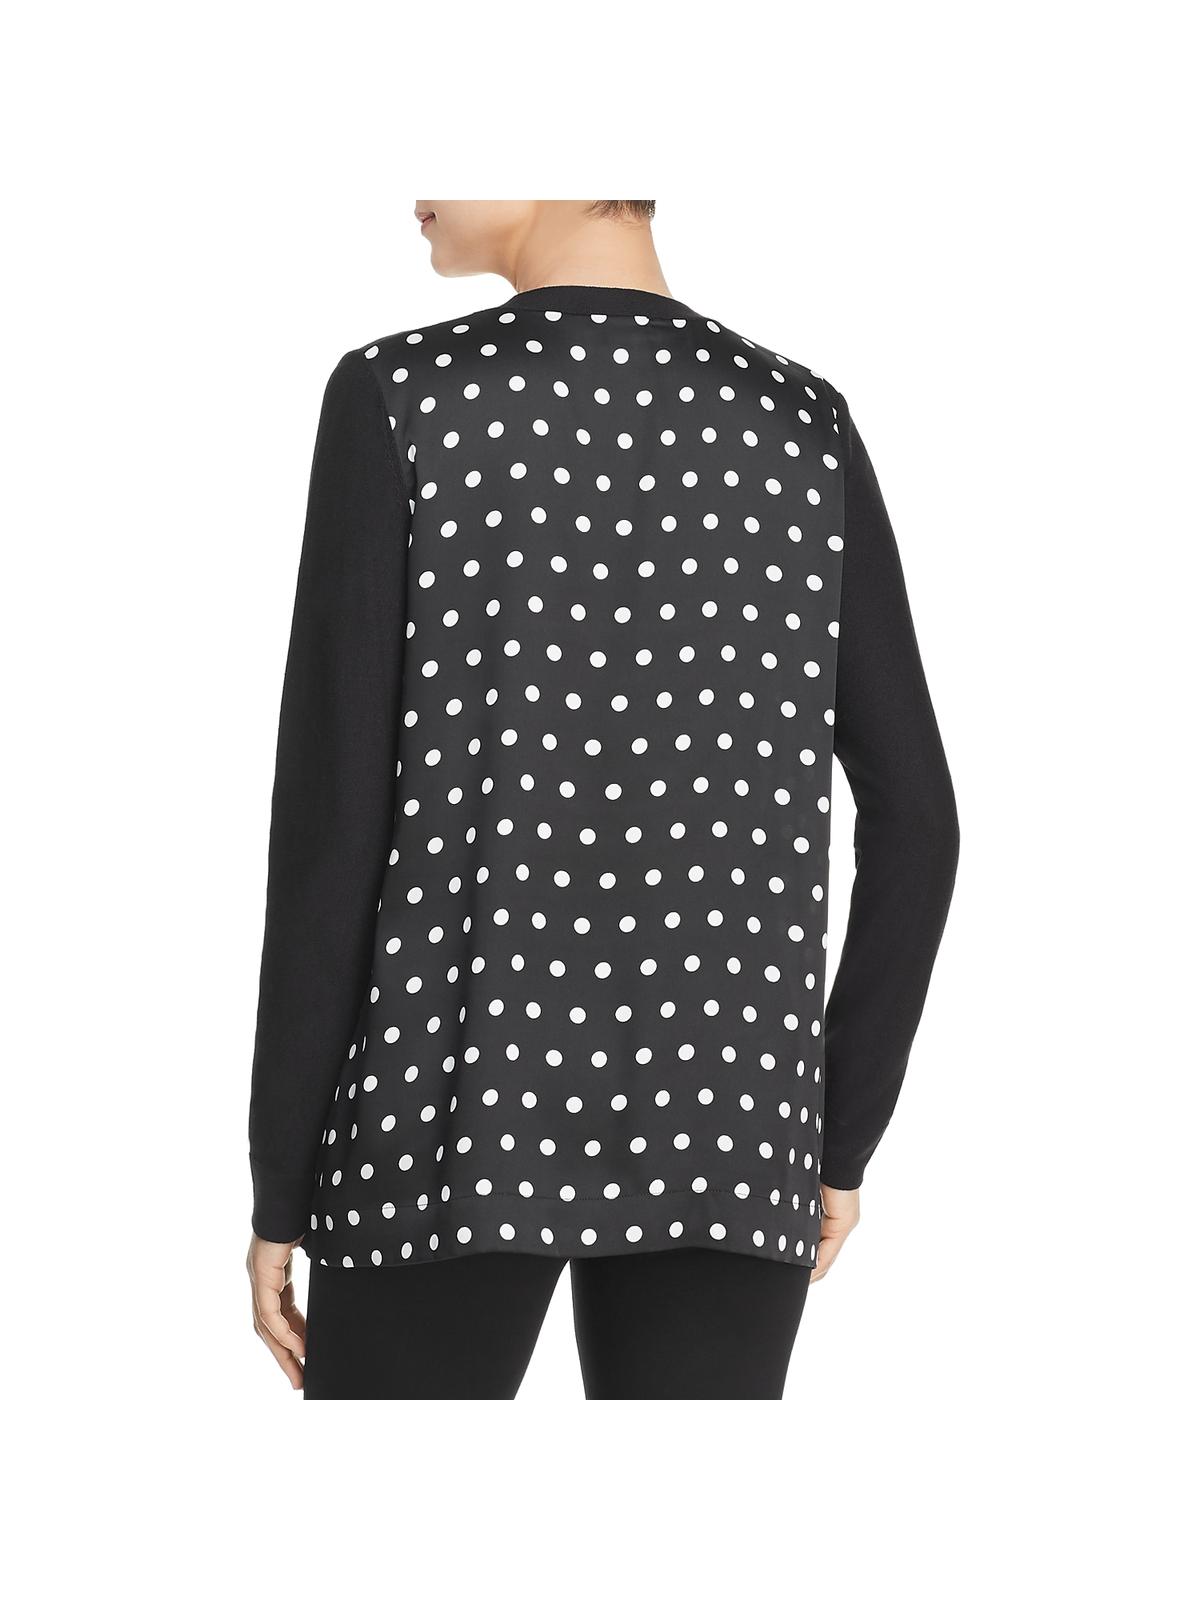 Donna Karan DOT CARDIGAN Polka Dot Mixed Media Cardigan Sweater - TopLine Fashion Lounge